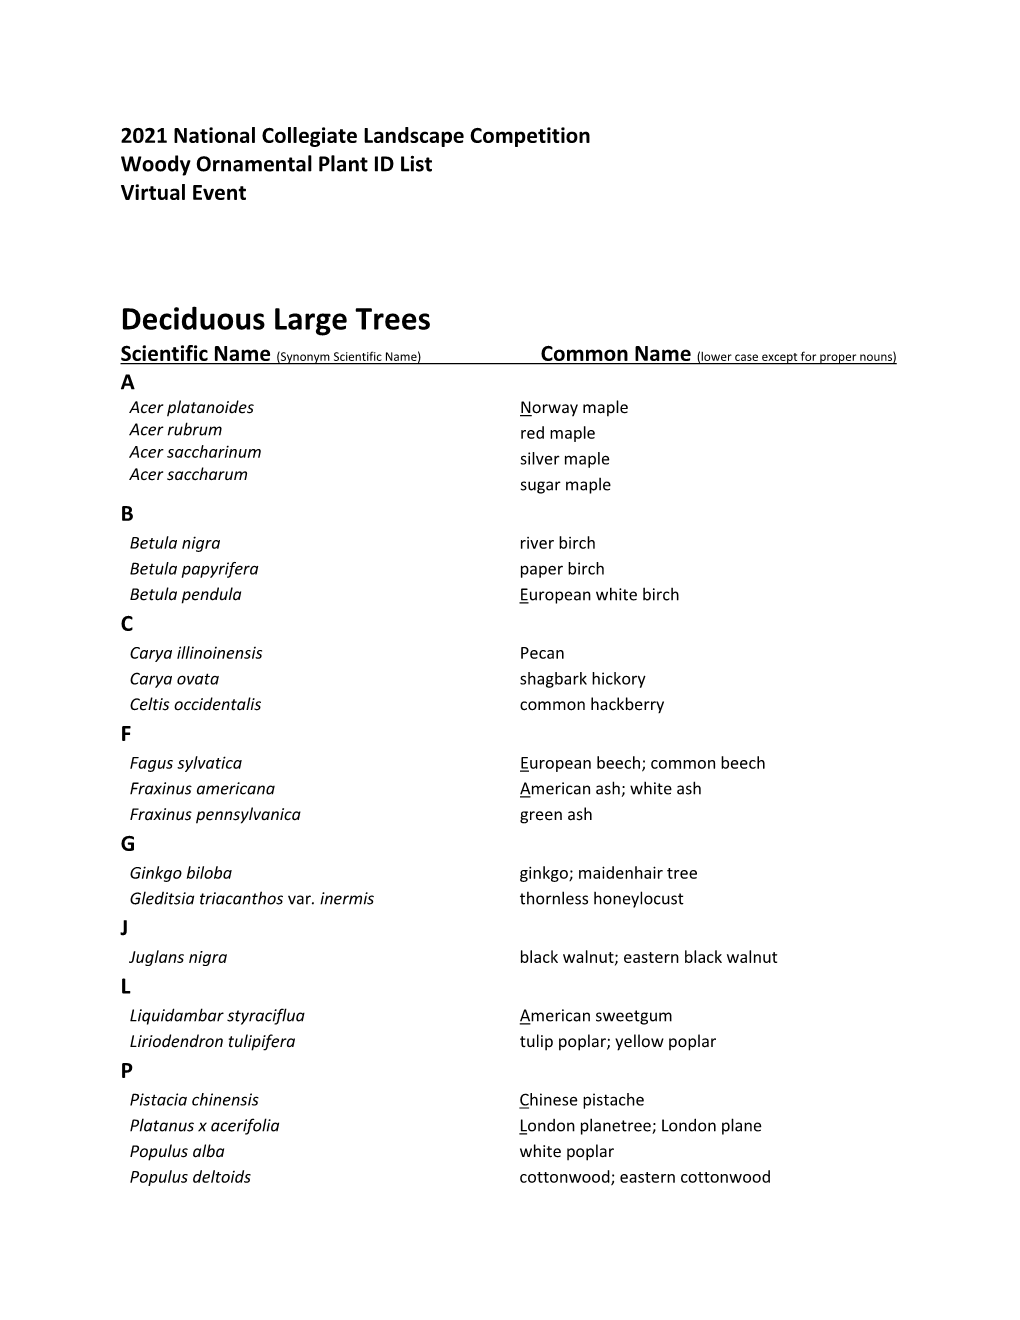 Deciduous Large Trees